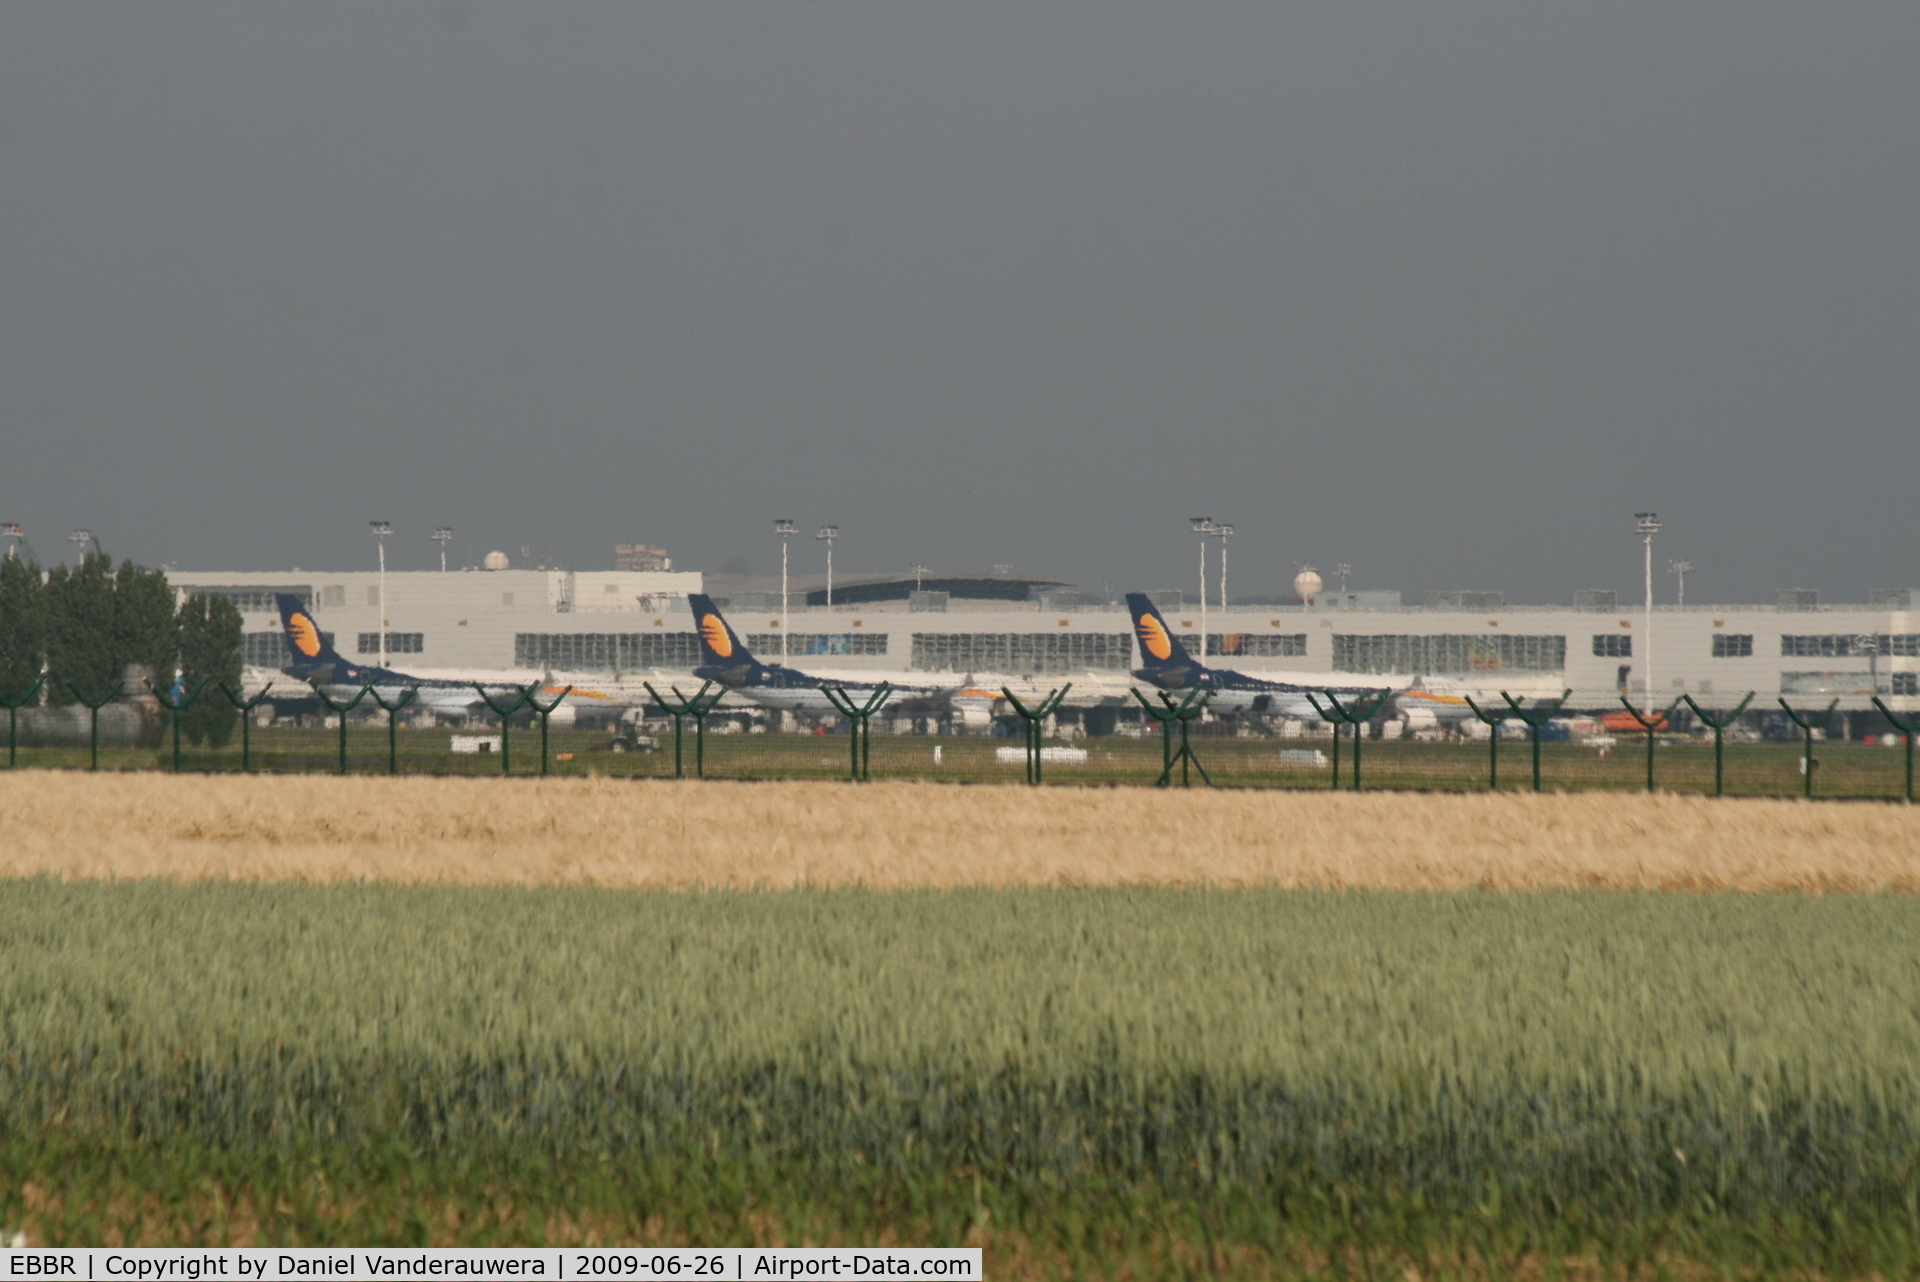 Brussels Airport, Brussels / Zaventem   Belgium (EBBR) - Terminal B (non Schengen) in the heat of summer